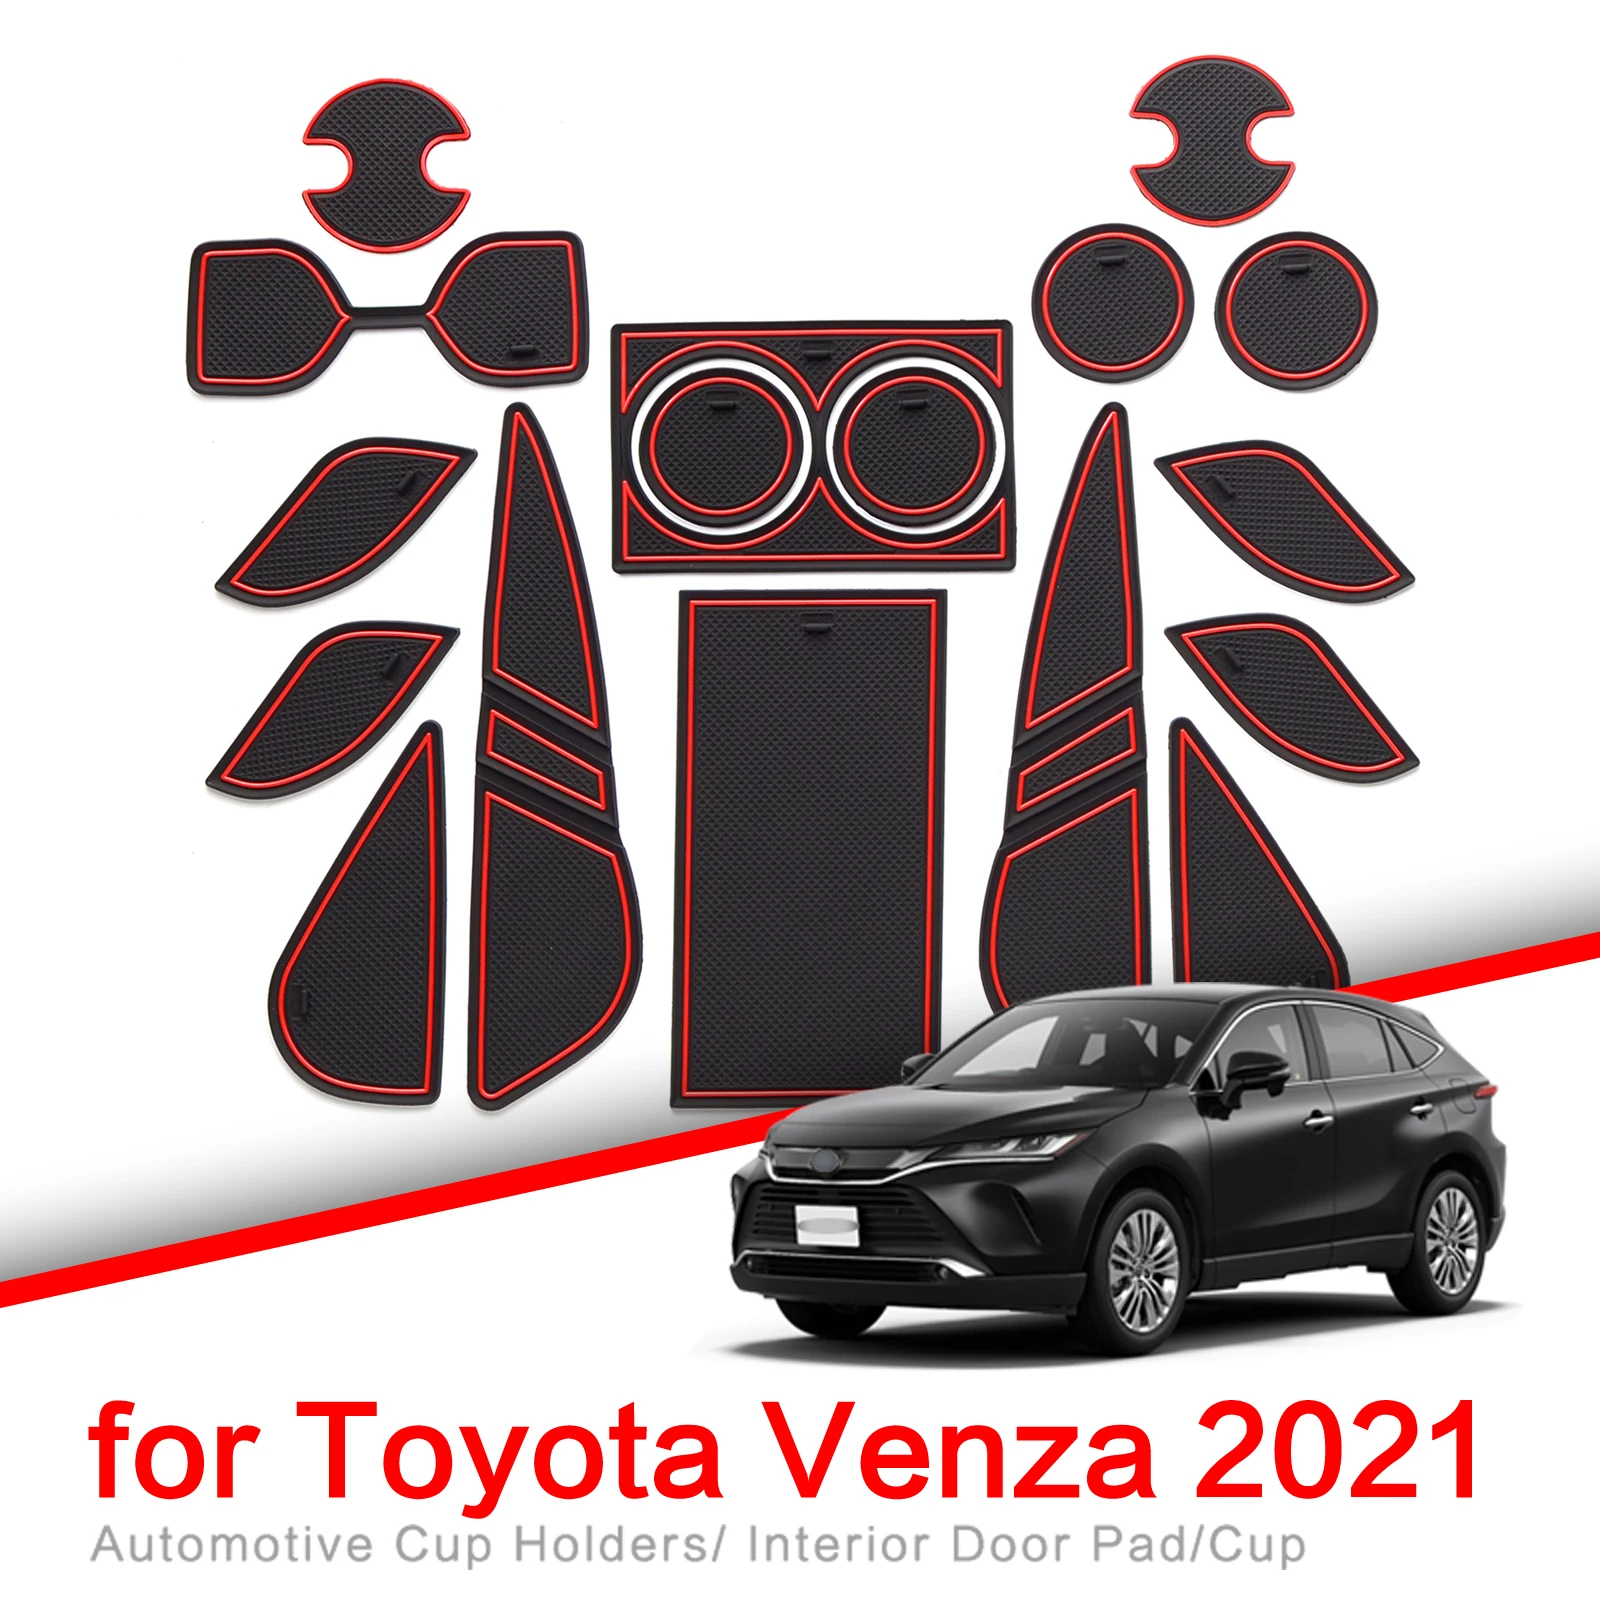 

Anti-Slip Gate Slot Cup Pad for Toyota Venza 2021 Accessories Rubber Coaster Door Groove Mats Non-Slip Mat Car Sticker